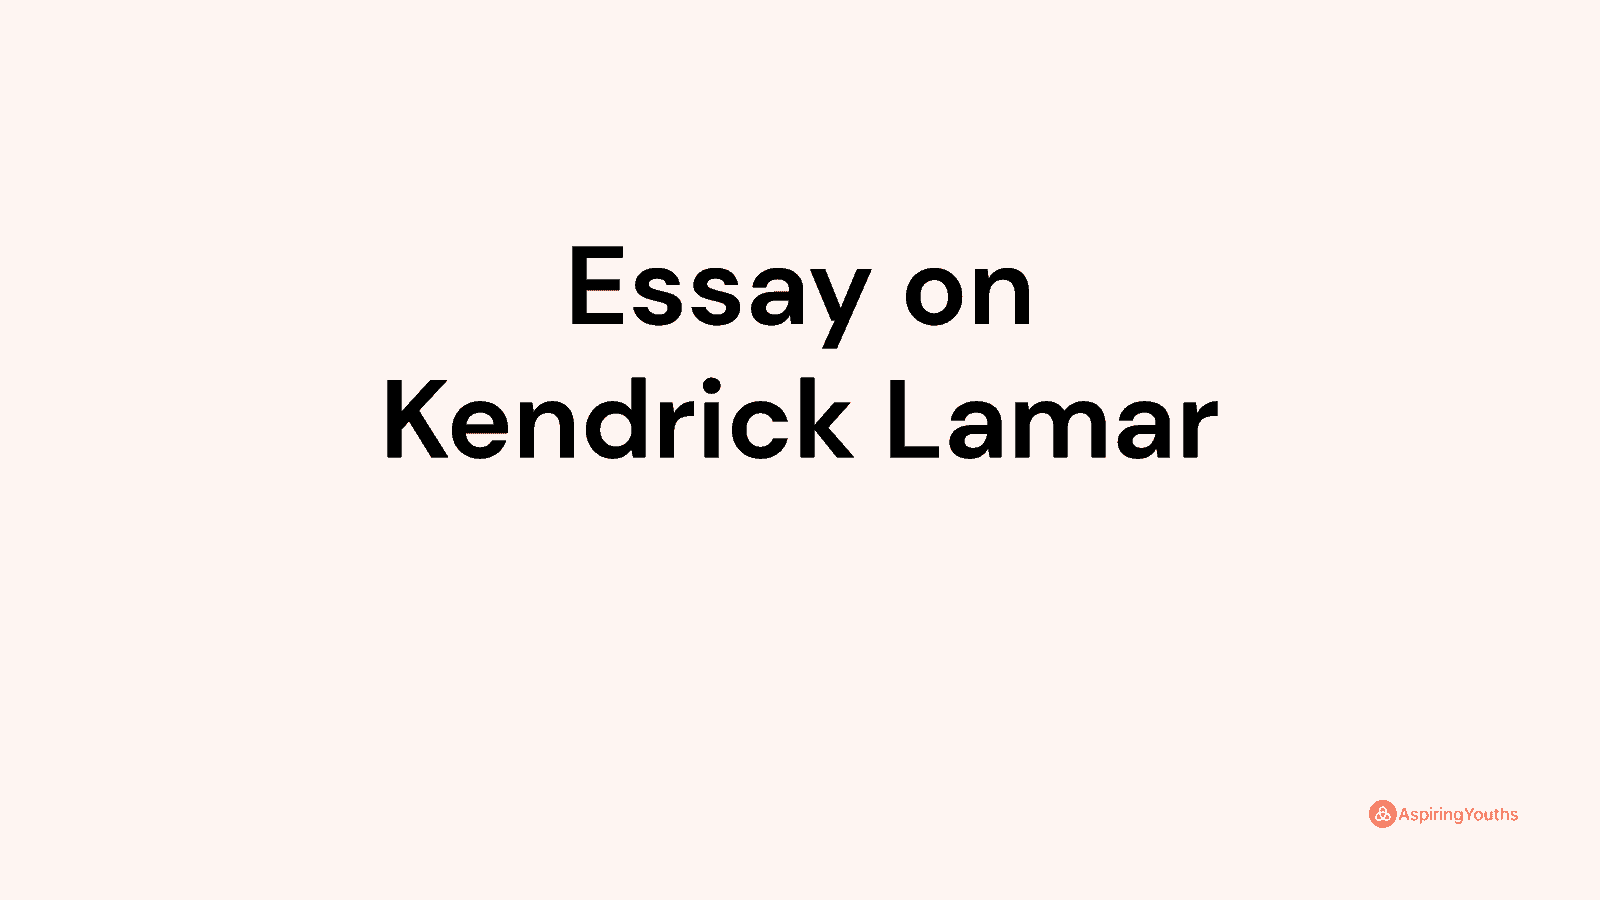 extended essay on kendrick lamar